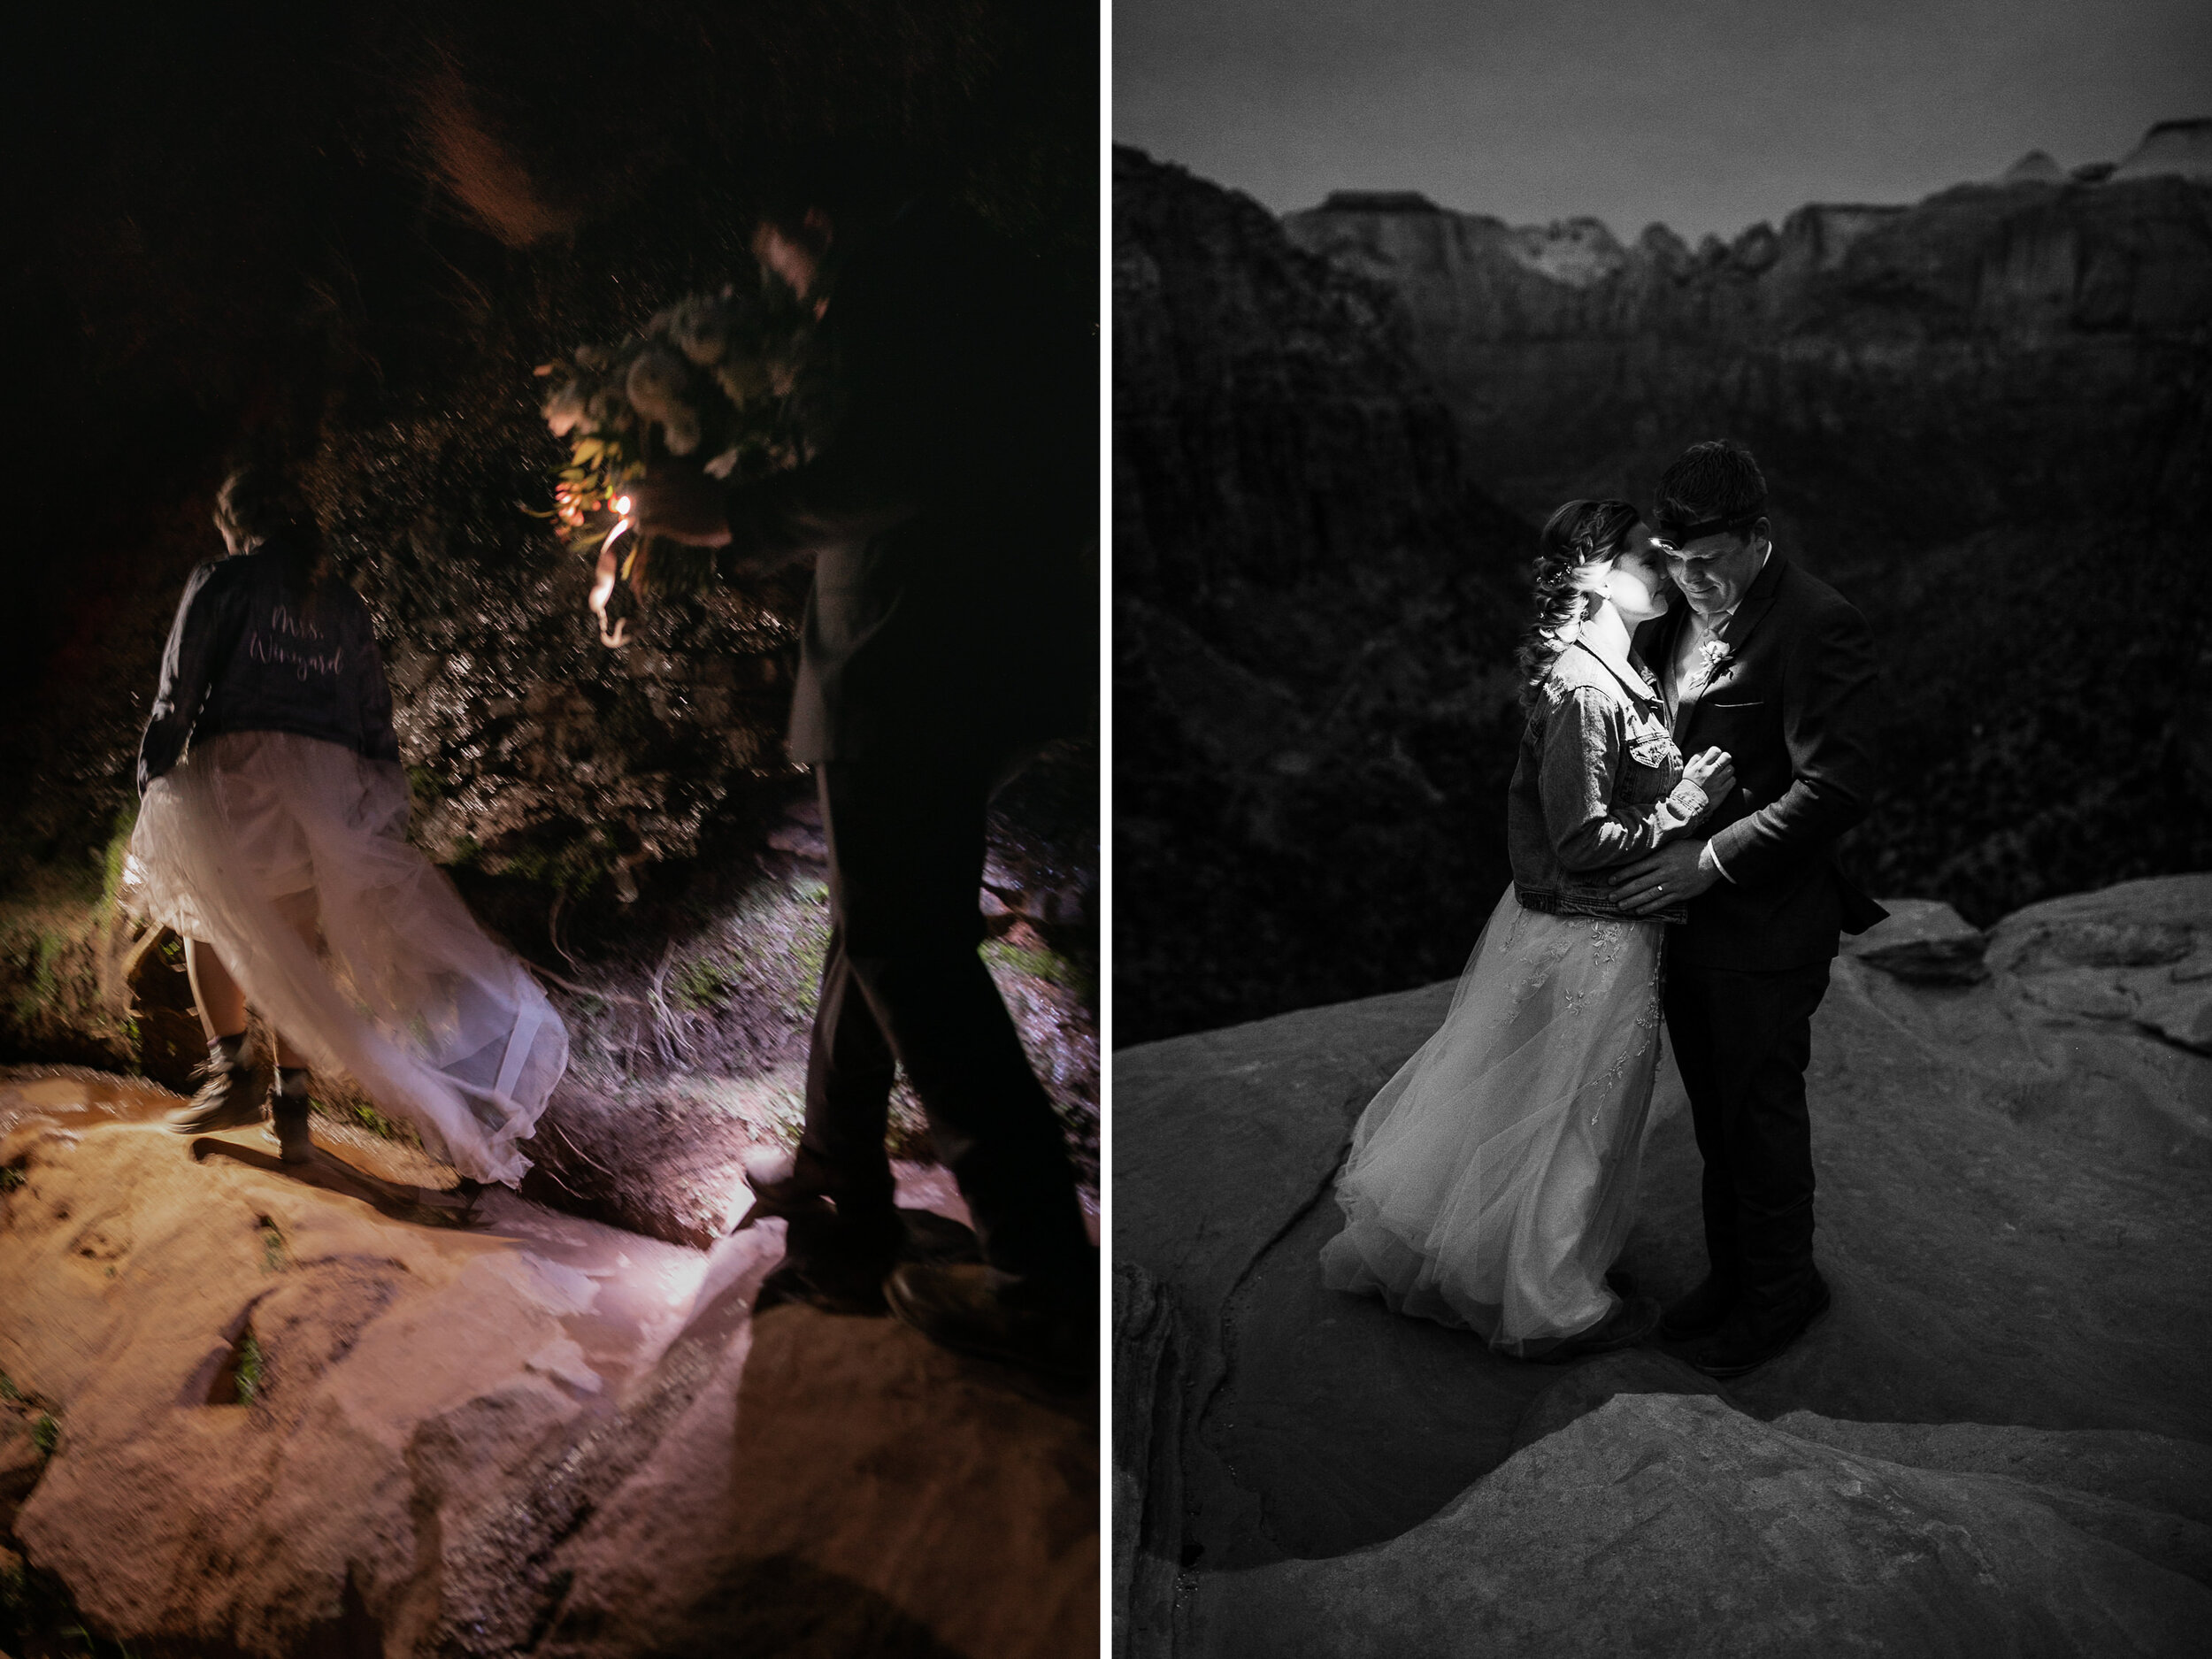 Zion Utah Elopement | Adventure Wedding Inspiration | The Hearnes Photography